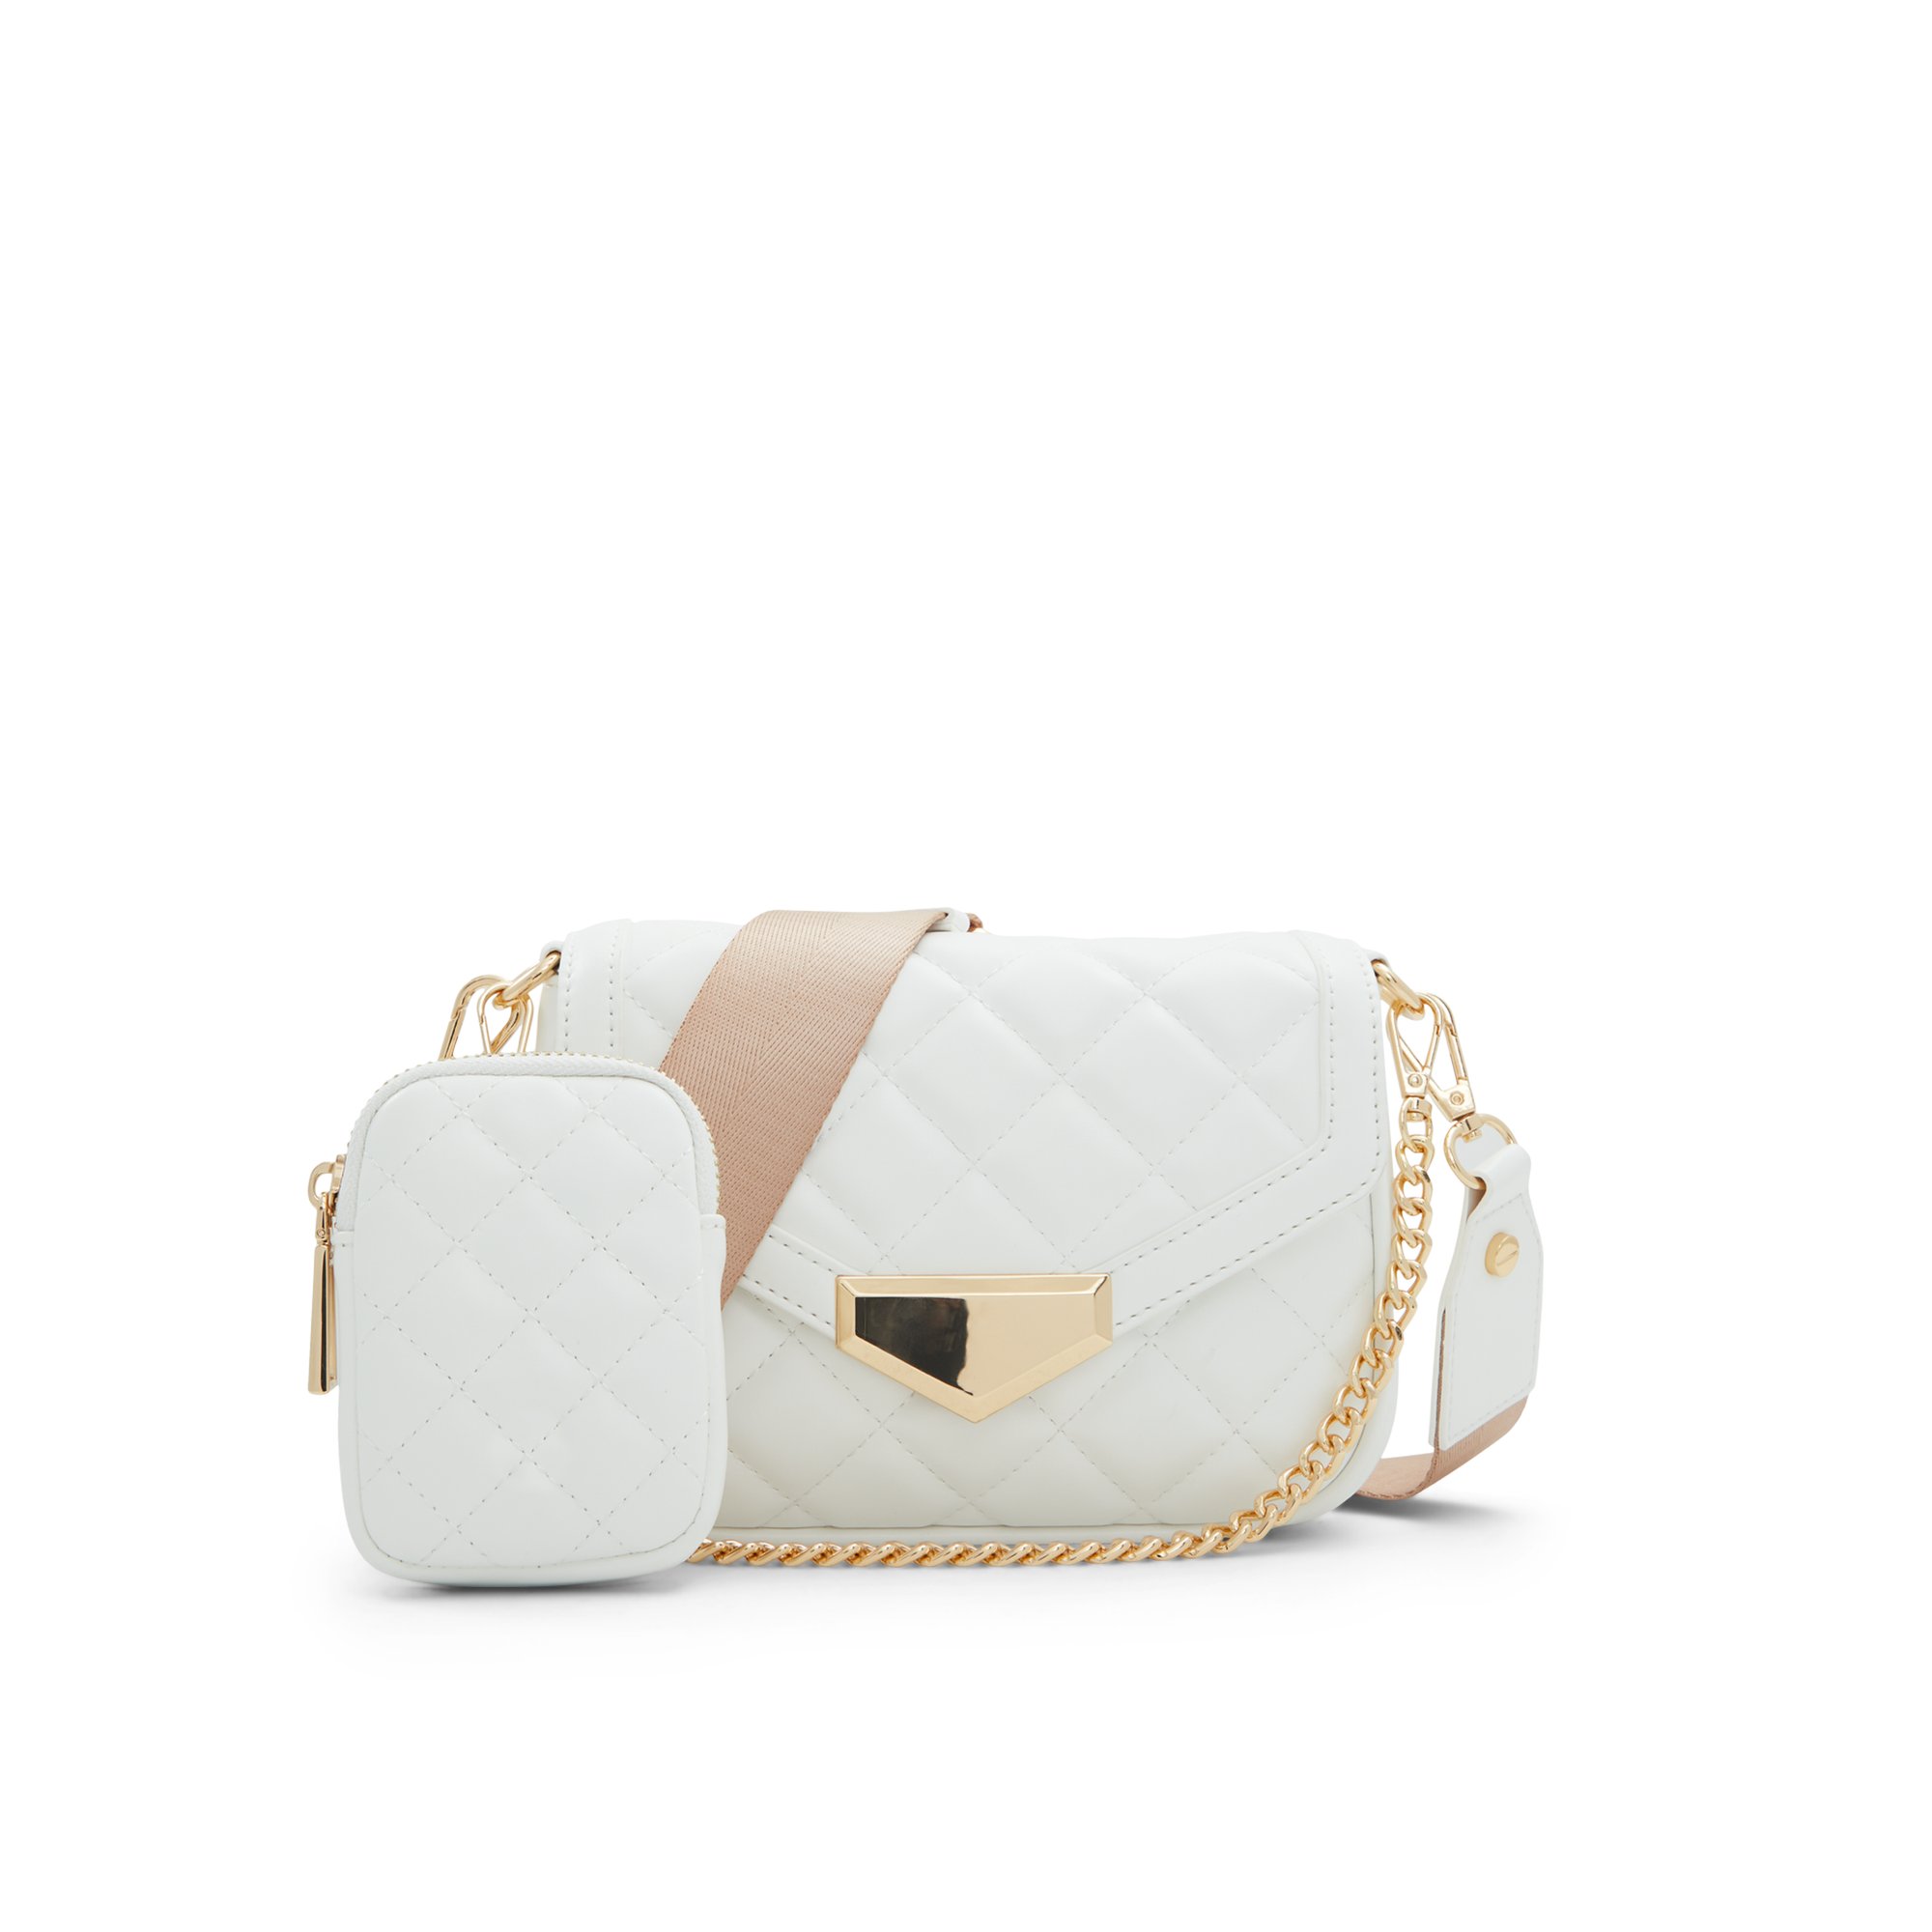 ALDO Miraewinx - Women's Crossbody Handbag - White